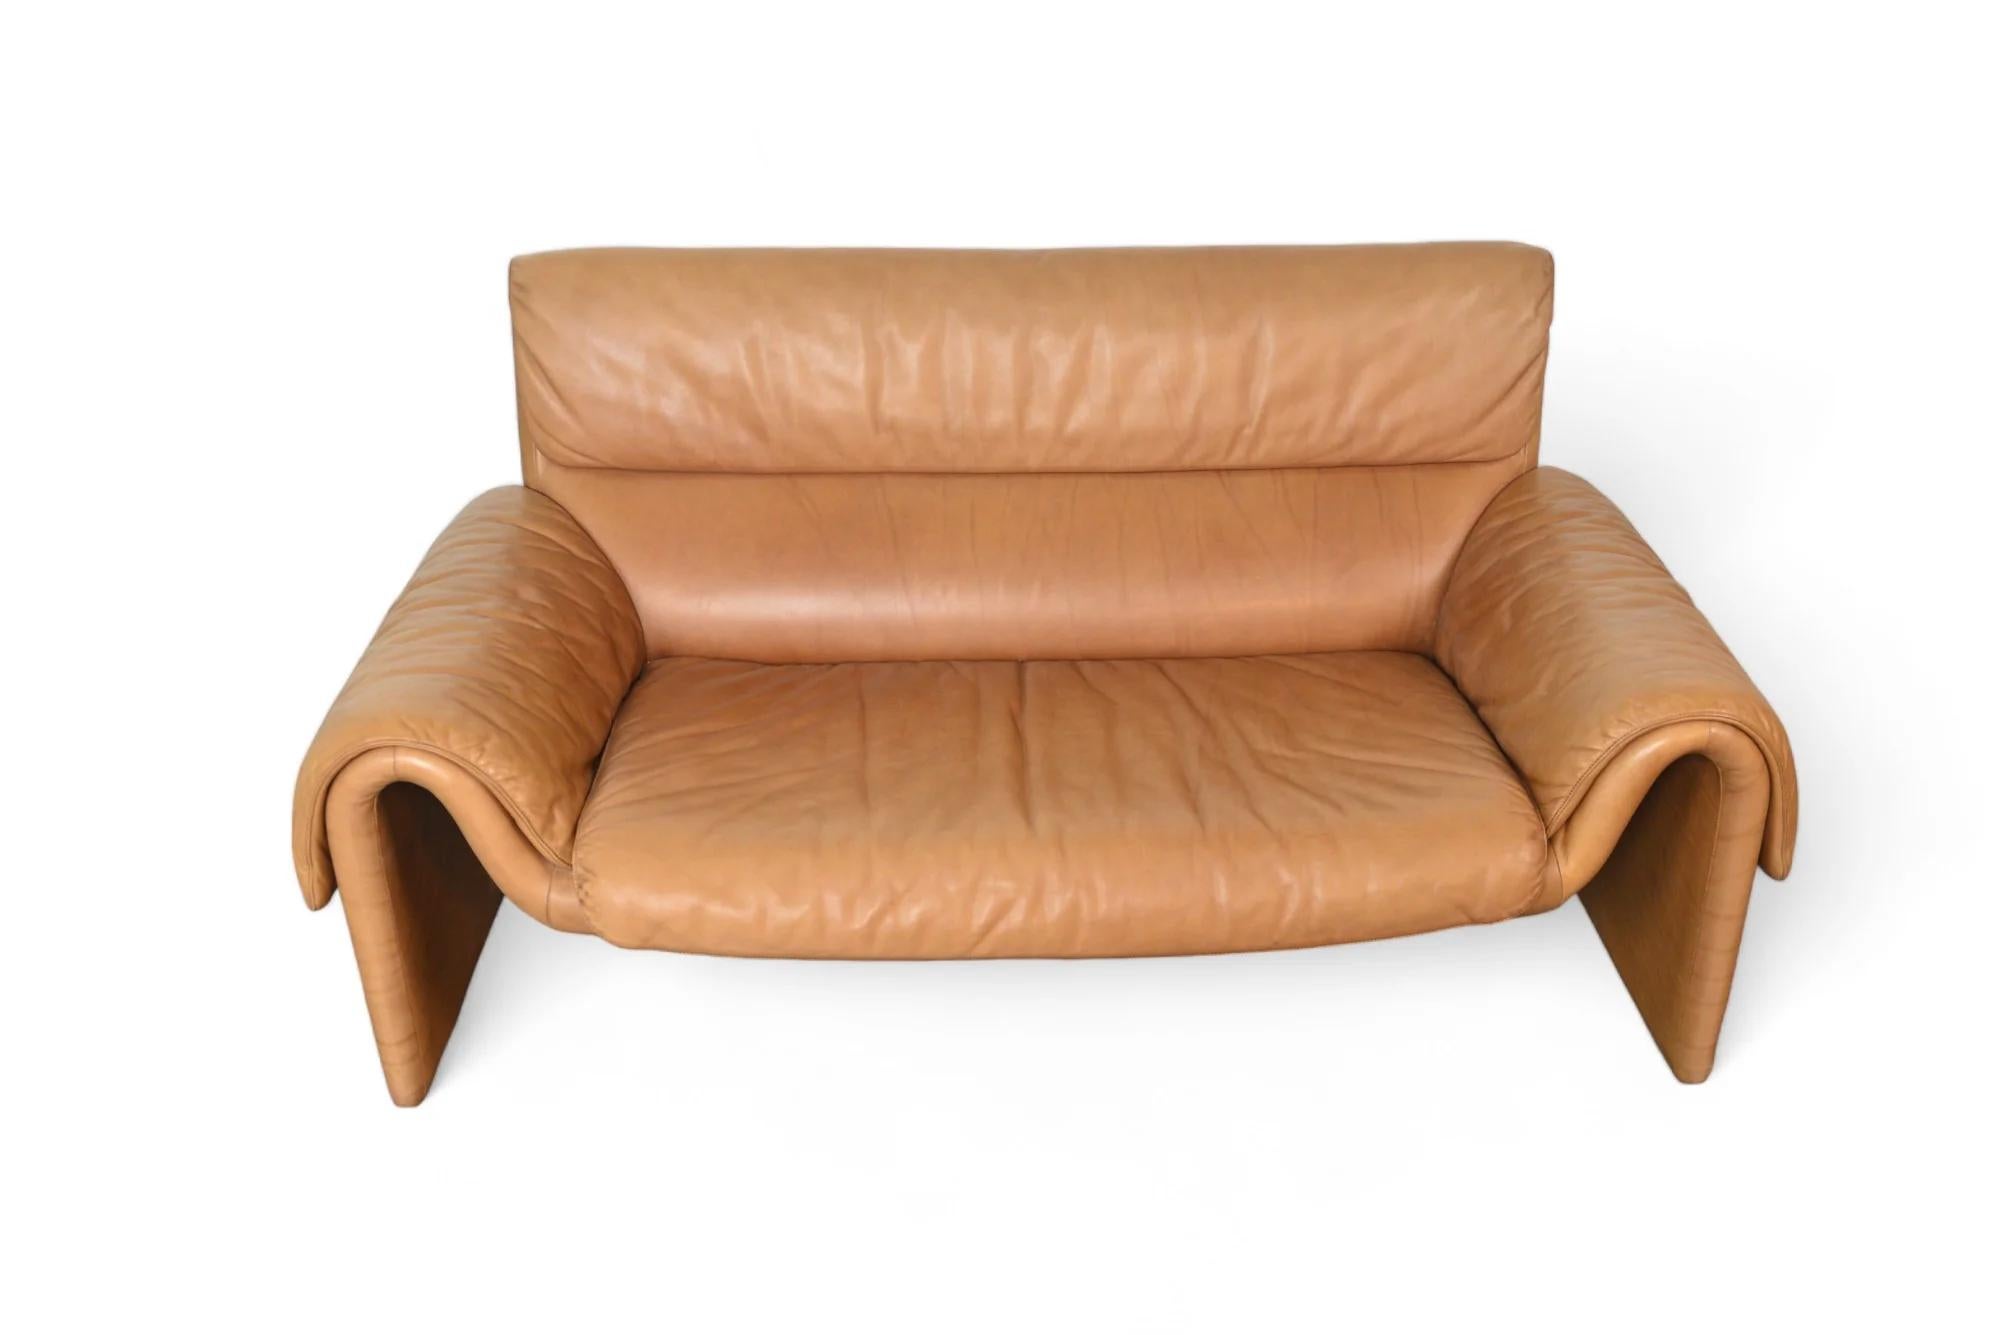 Origin: Switzerland
Designer: Unknown
Manufacturer: De Sede
Era: 1970s
Materials: Leather
Measurements: 61″ wide x 30″ deep x 31.5″ tall, Seat: 15